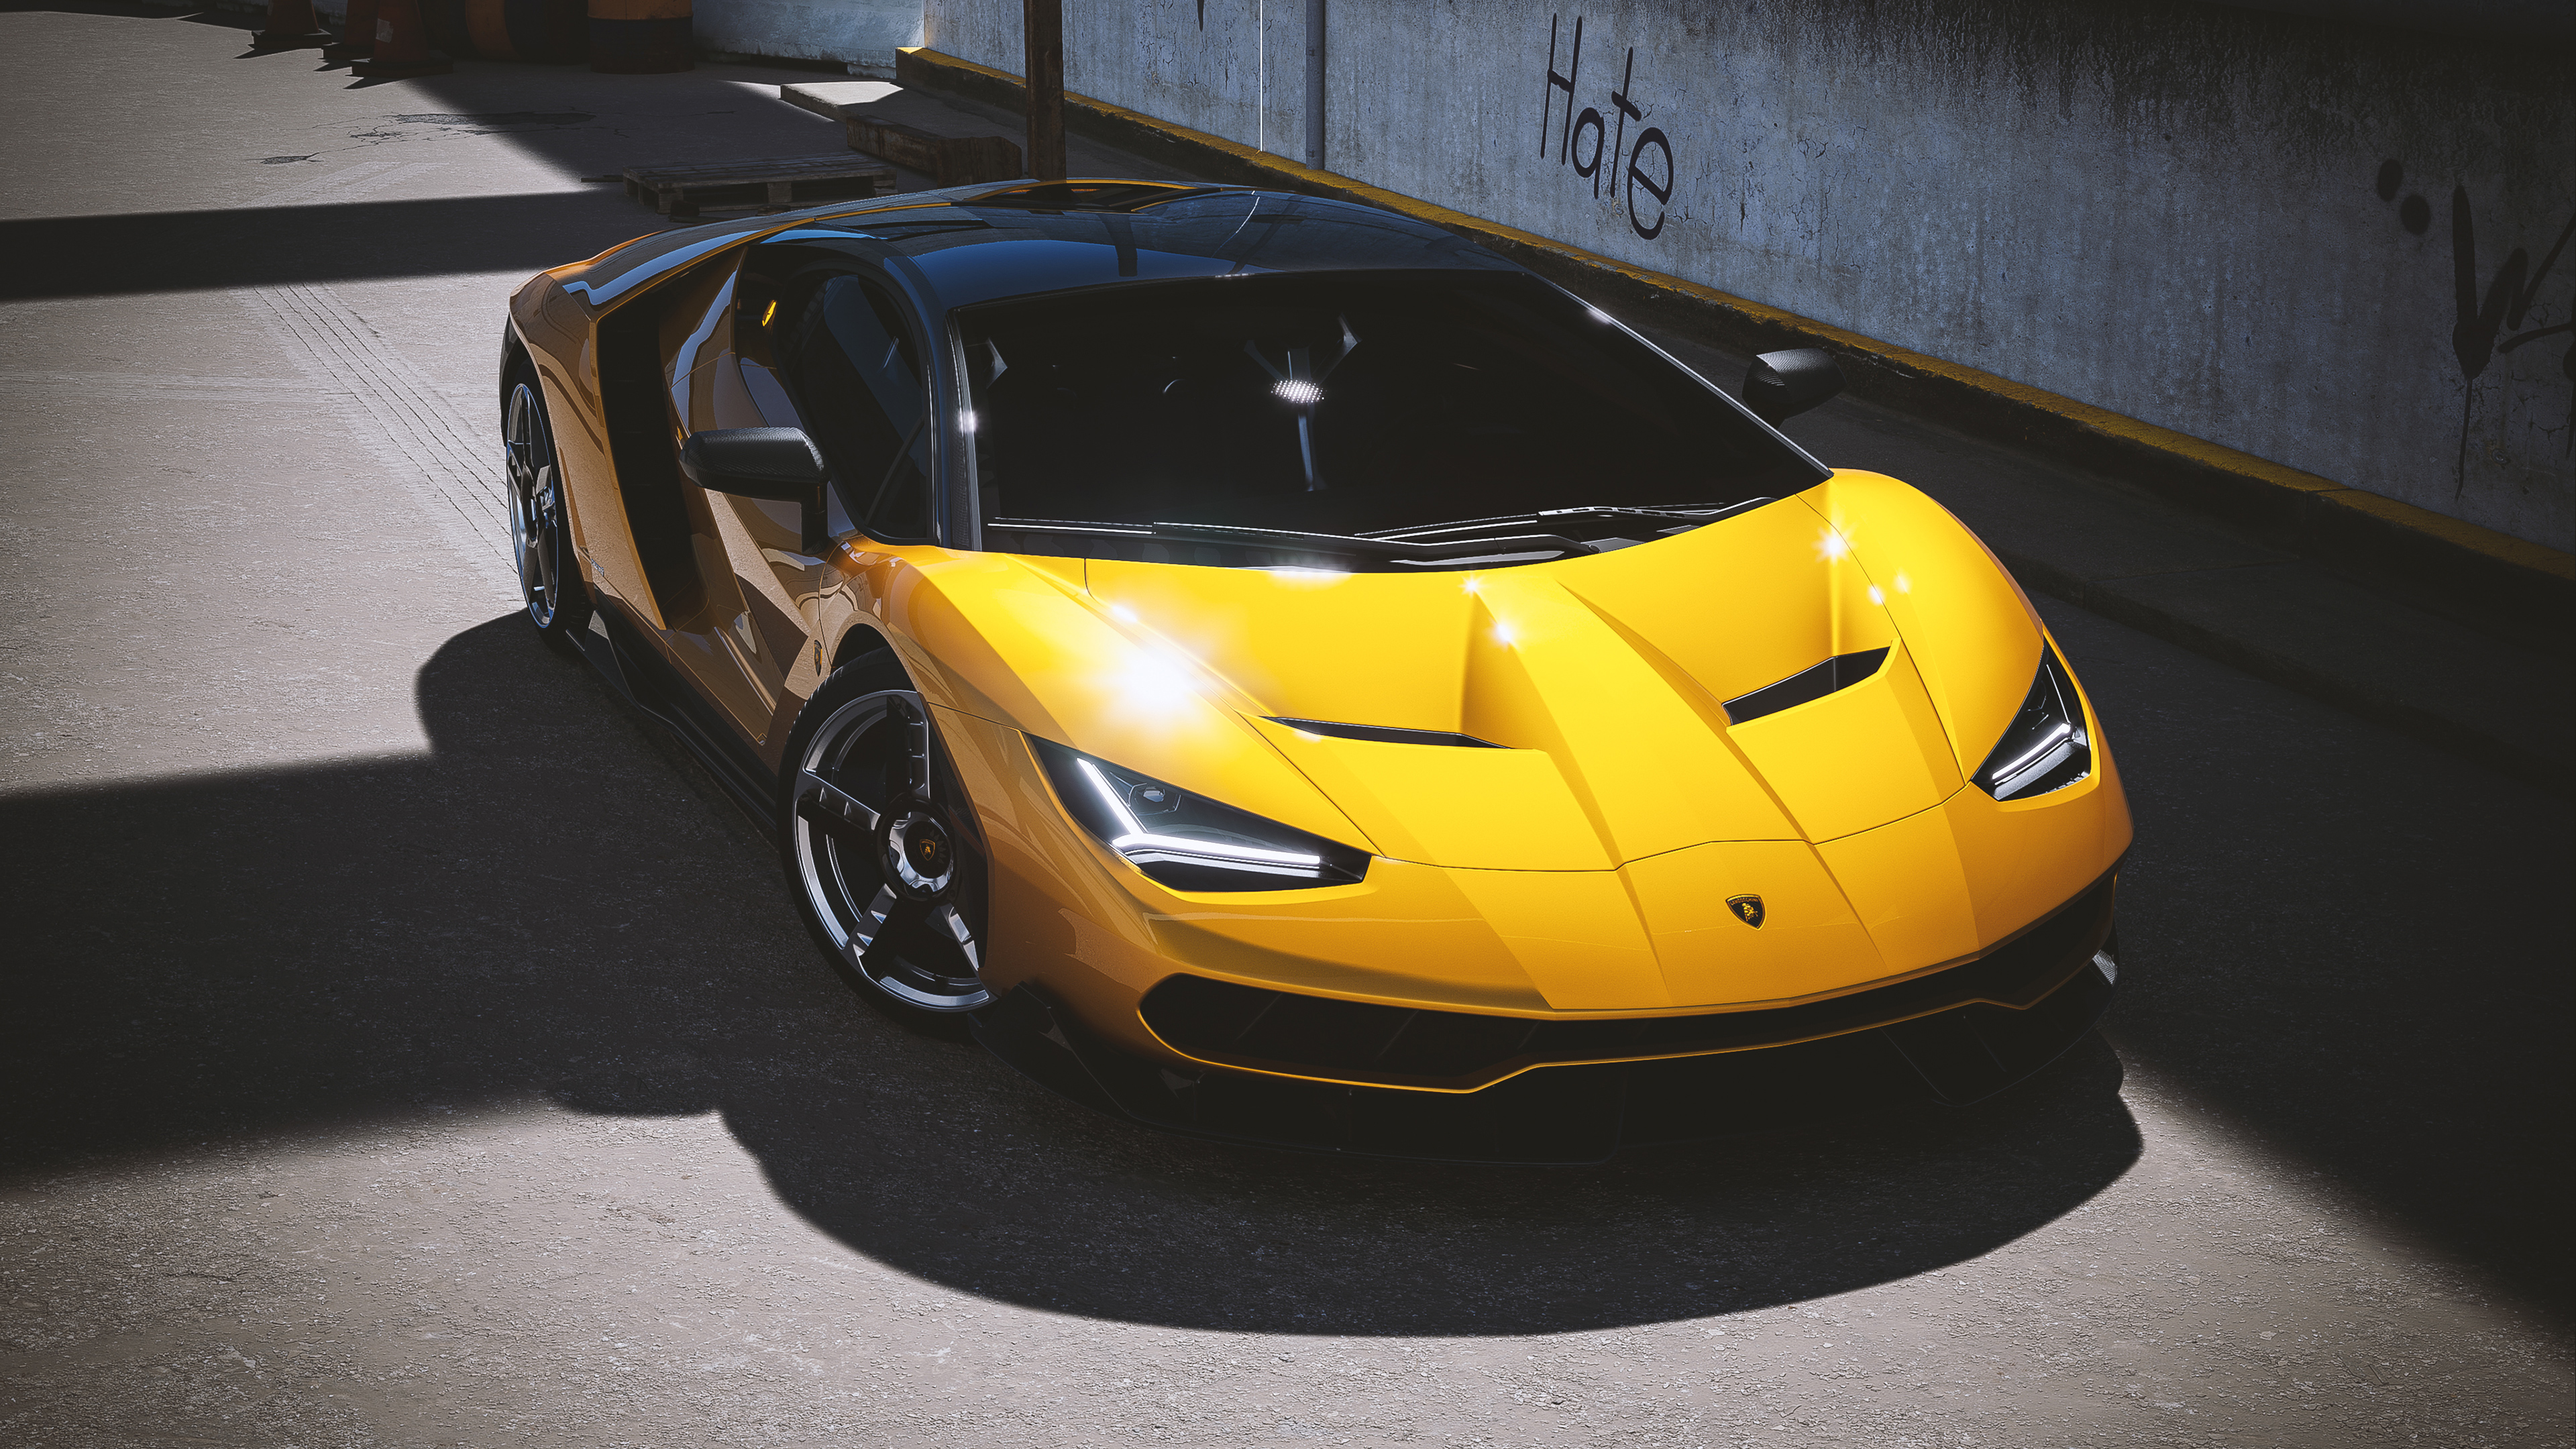 Lamborghini Centenario Yellow Cgi 4k, HD Cars, 4k Wallpaper, Image, Background, Photo and Picture